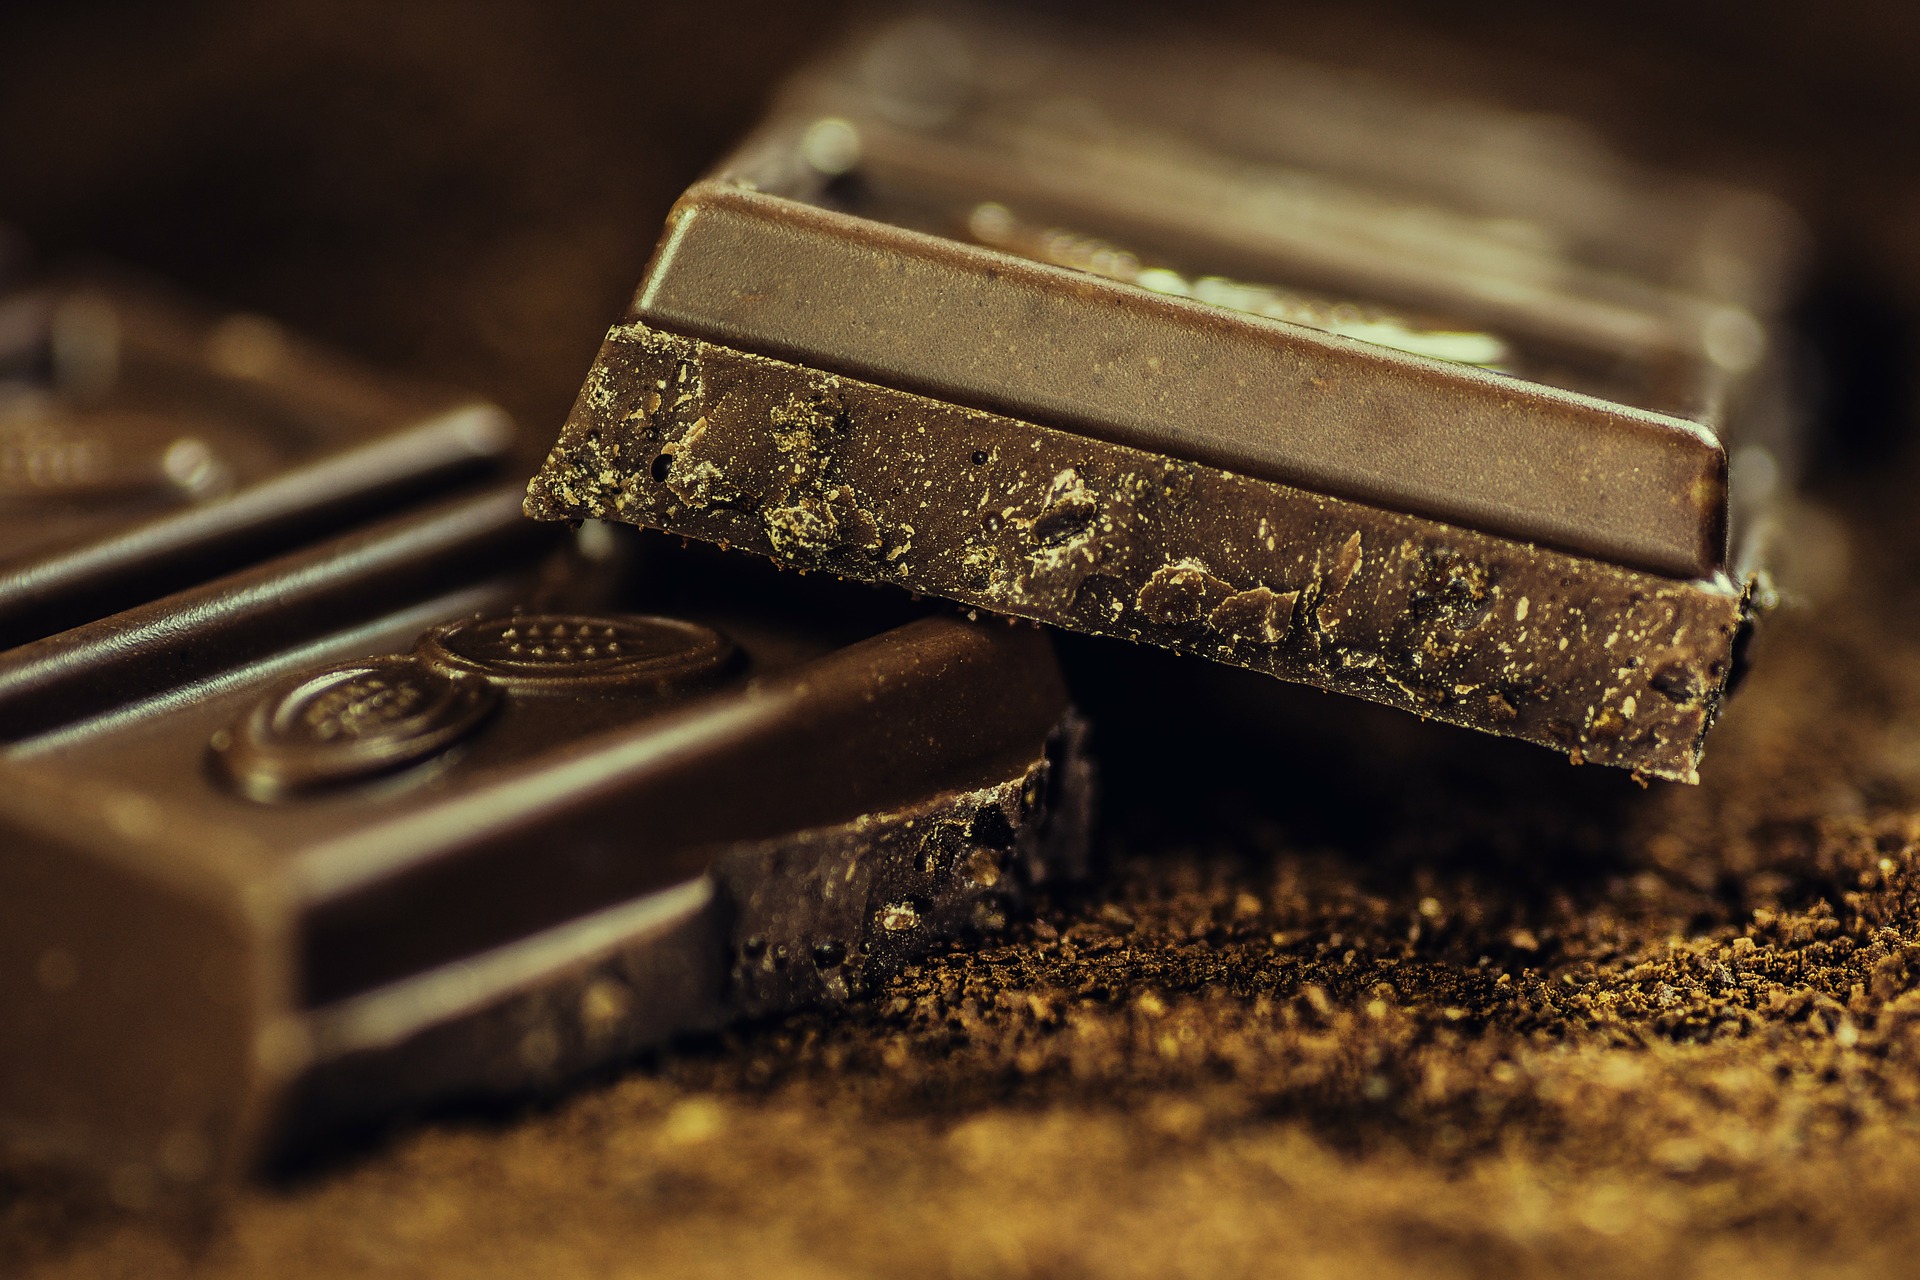 4577-chocolate-183543-1920.jpg